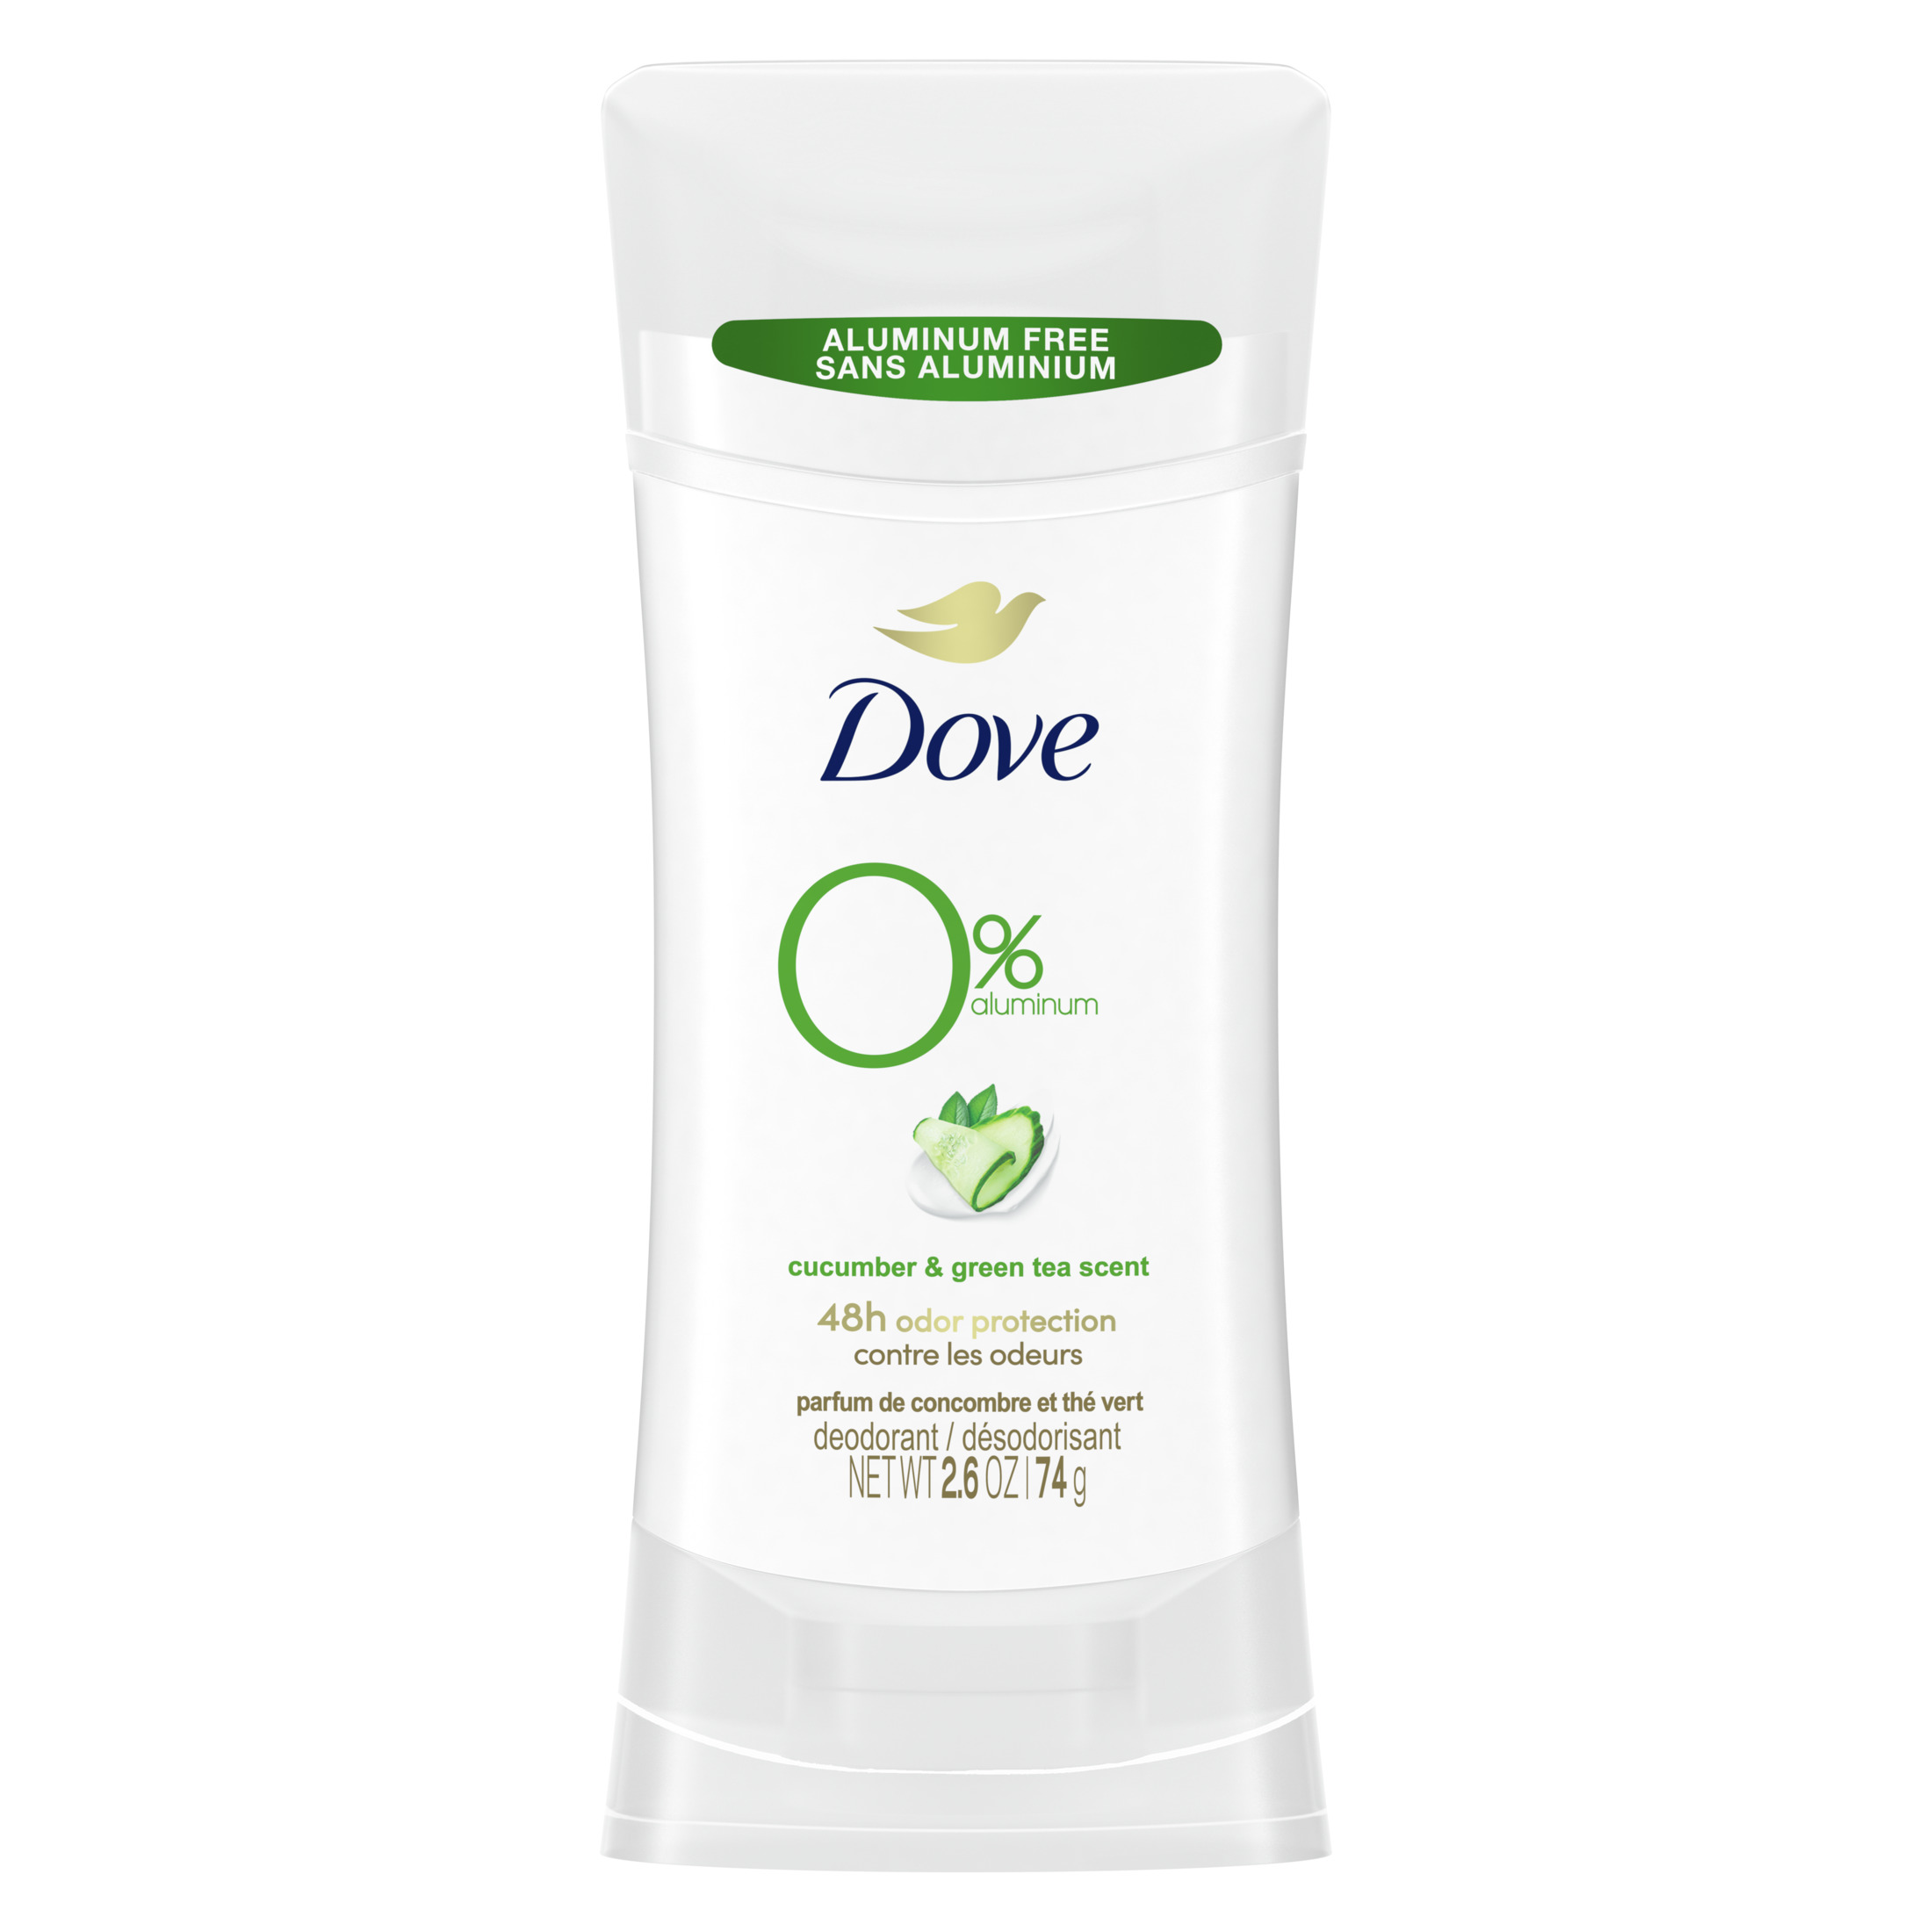 Dove 0% Aluminum Women's Deodorant Stick, Cucumber and Green Tea, 2.6 oz - image 1 of 10